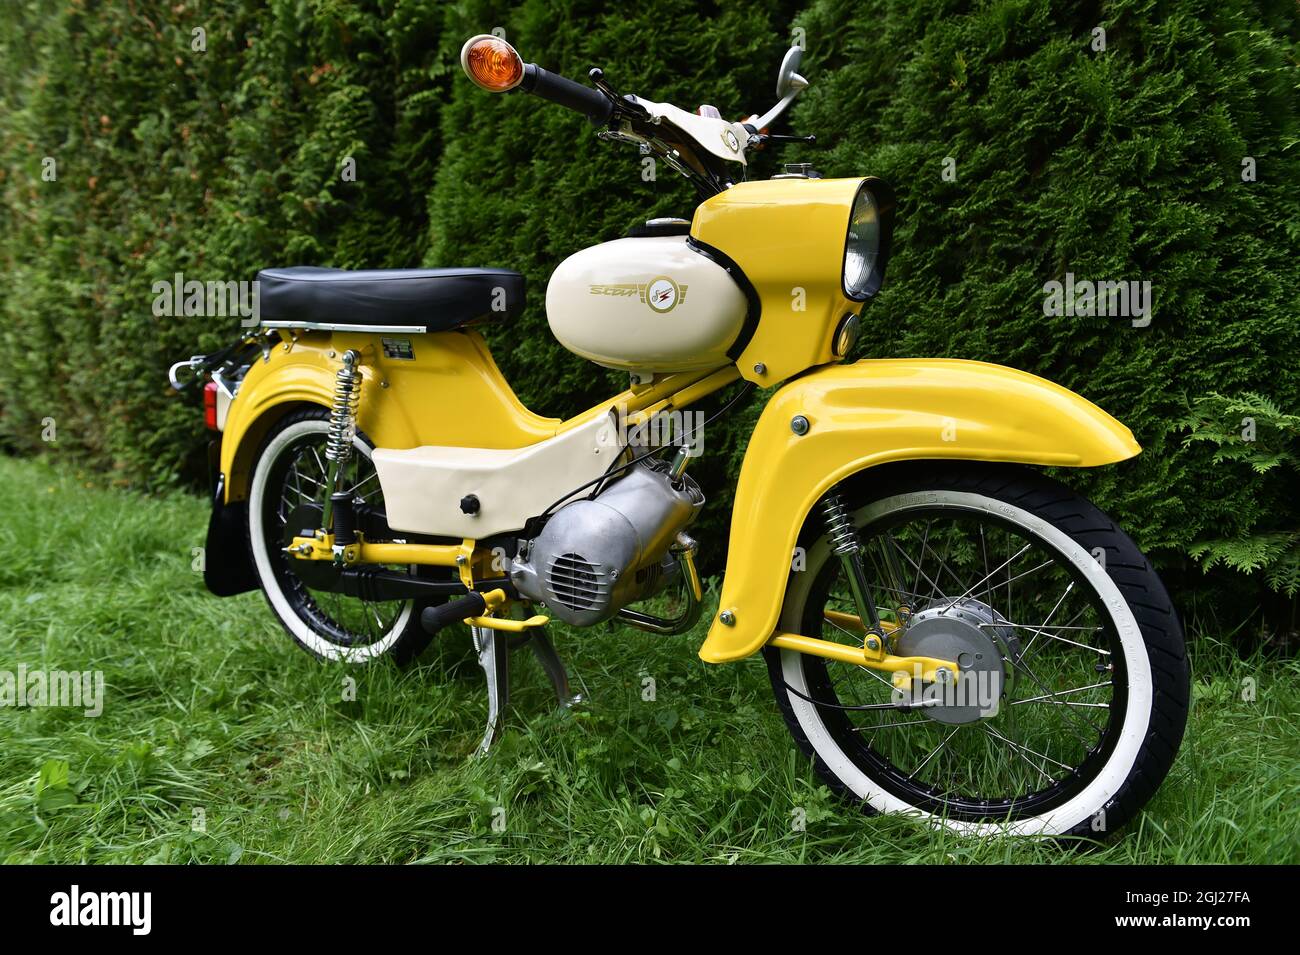 Simson Star Moped - pleasure on 2 wheels Poster by VEB Ostladen